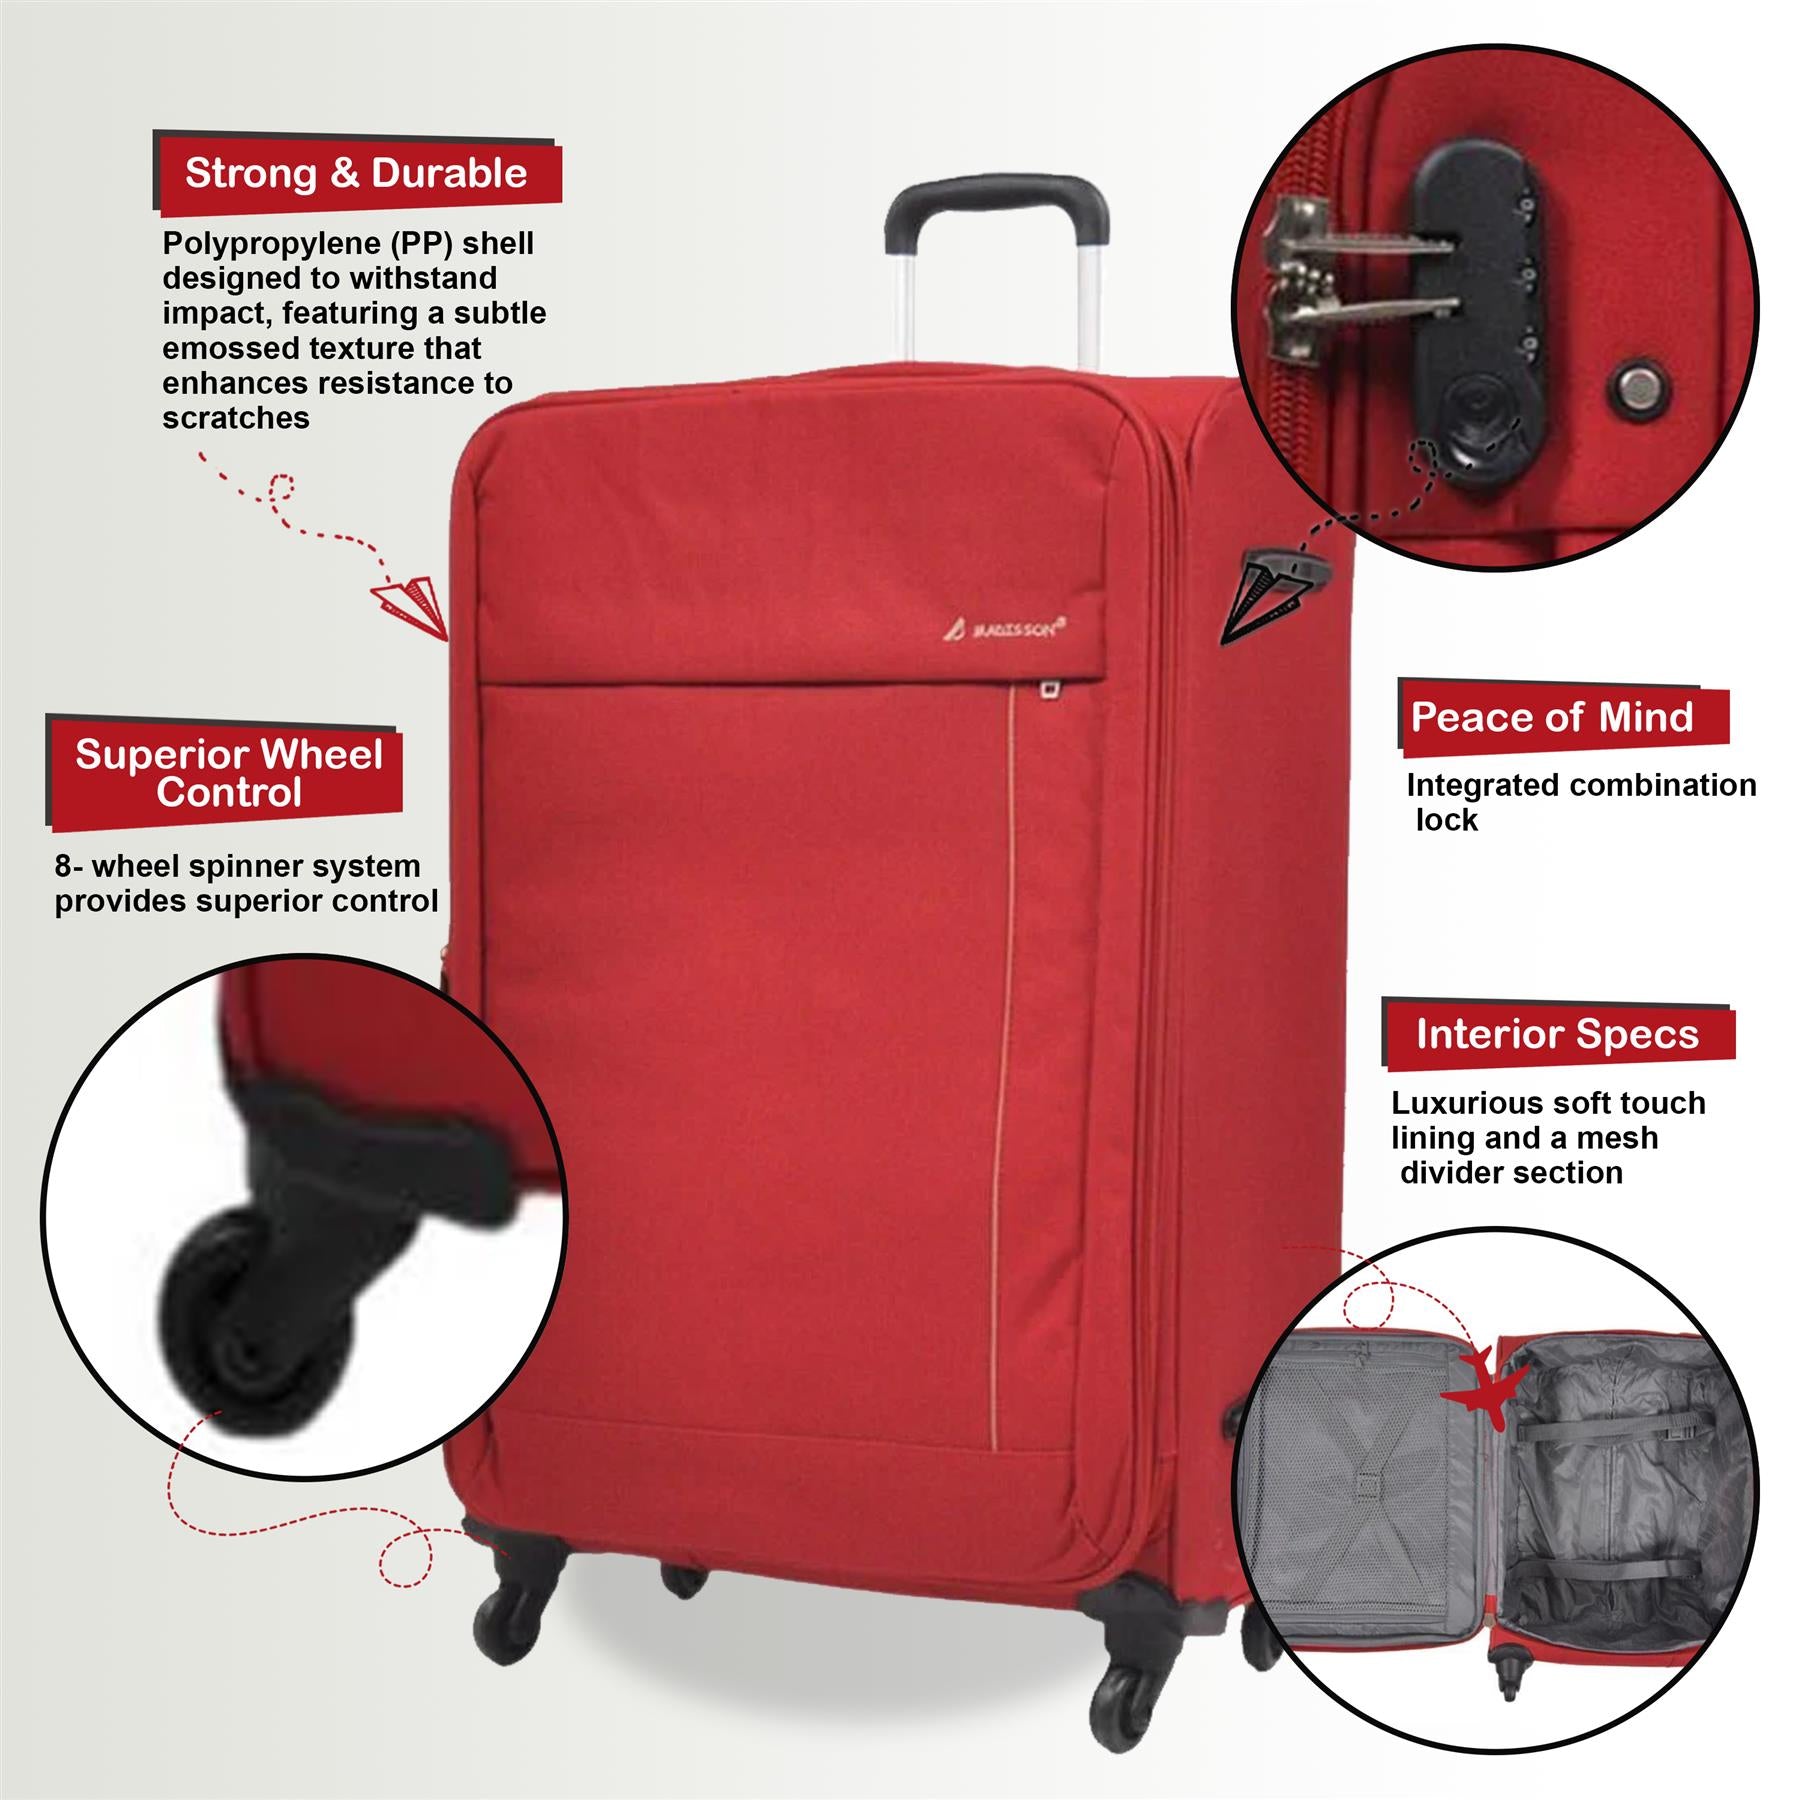 Carrollton Medium Soft Shell Suitcase in Red